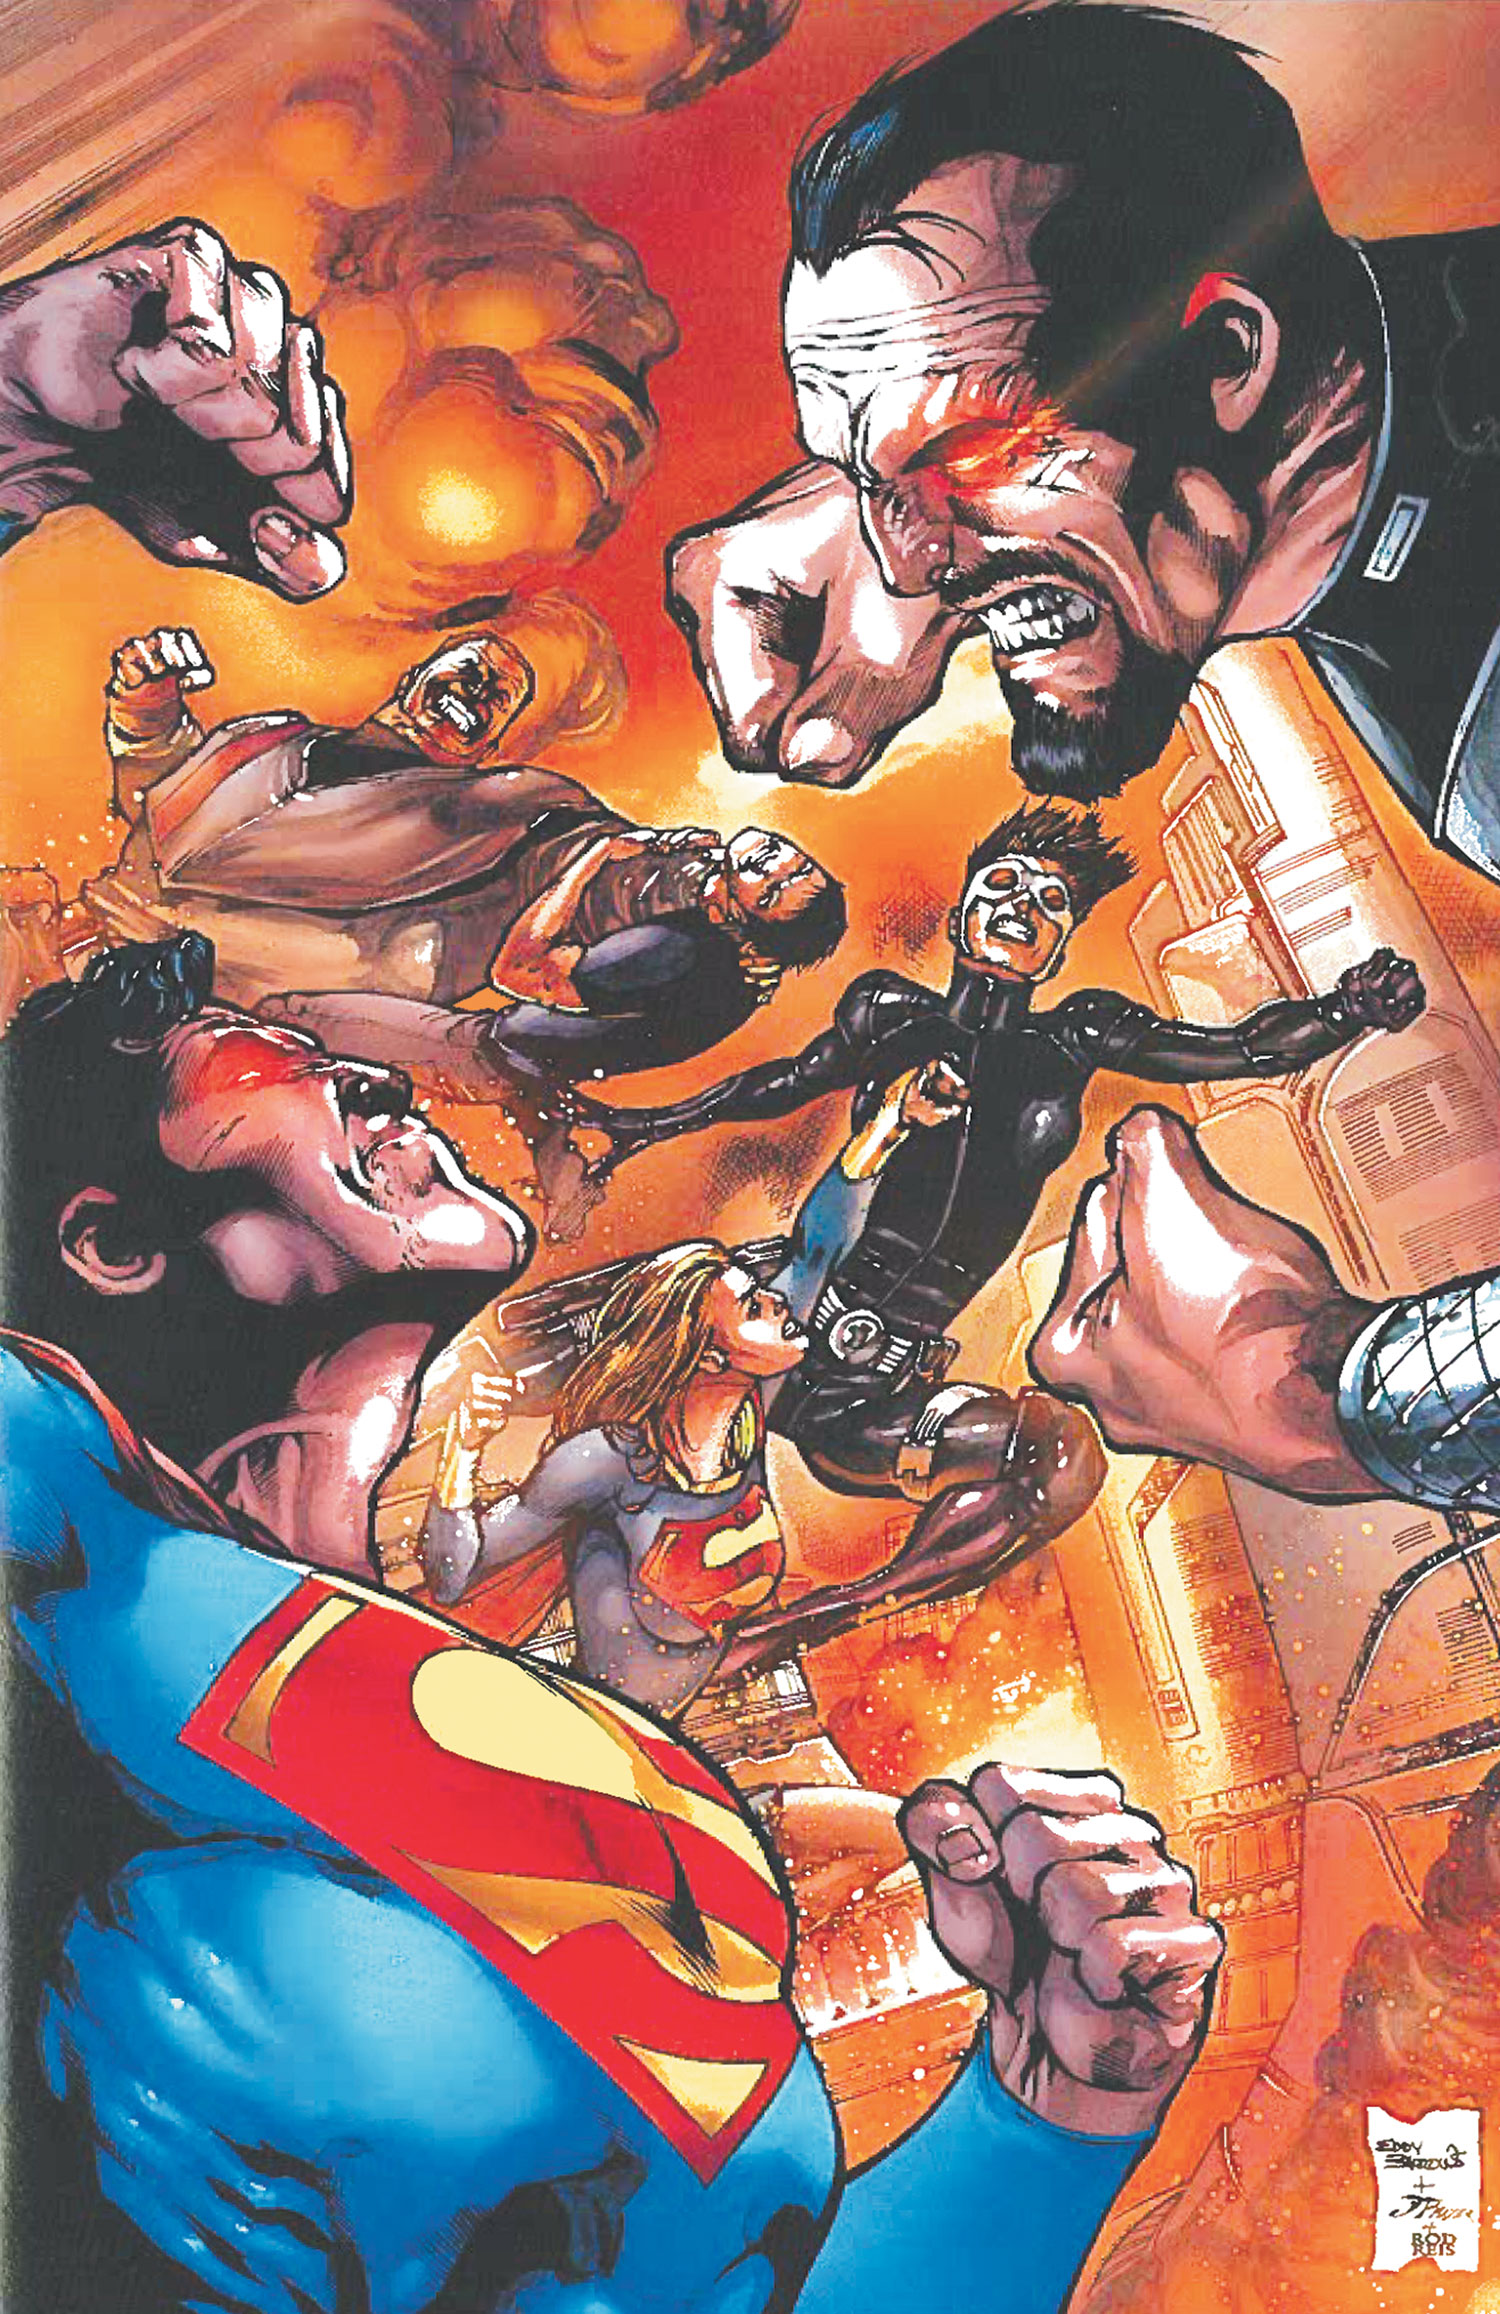 superman man of steel general zod vs superman